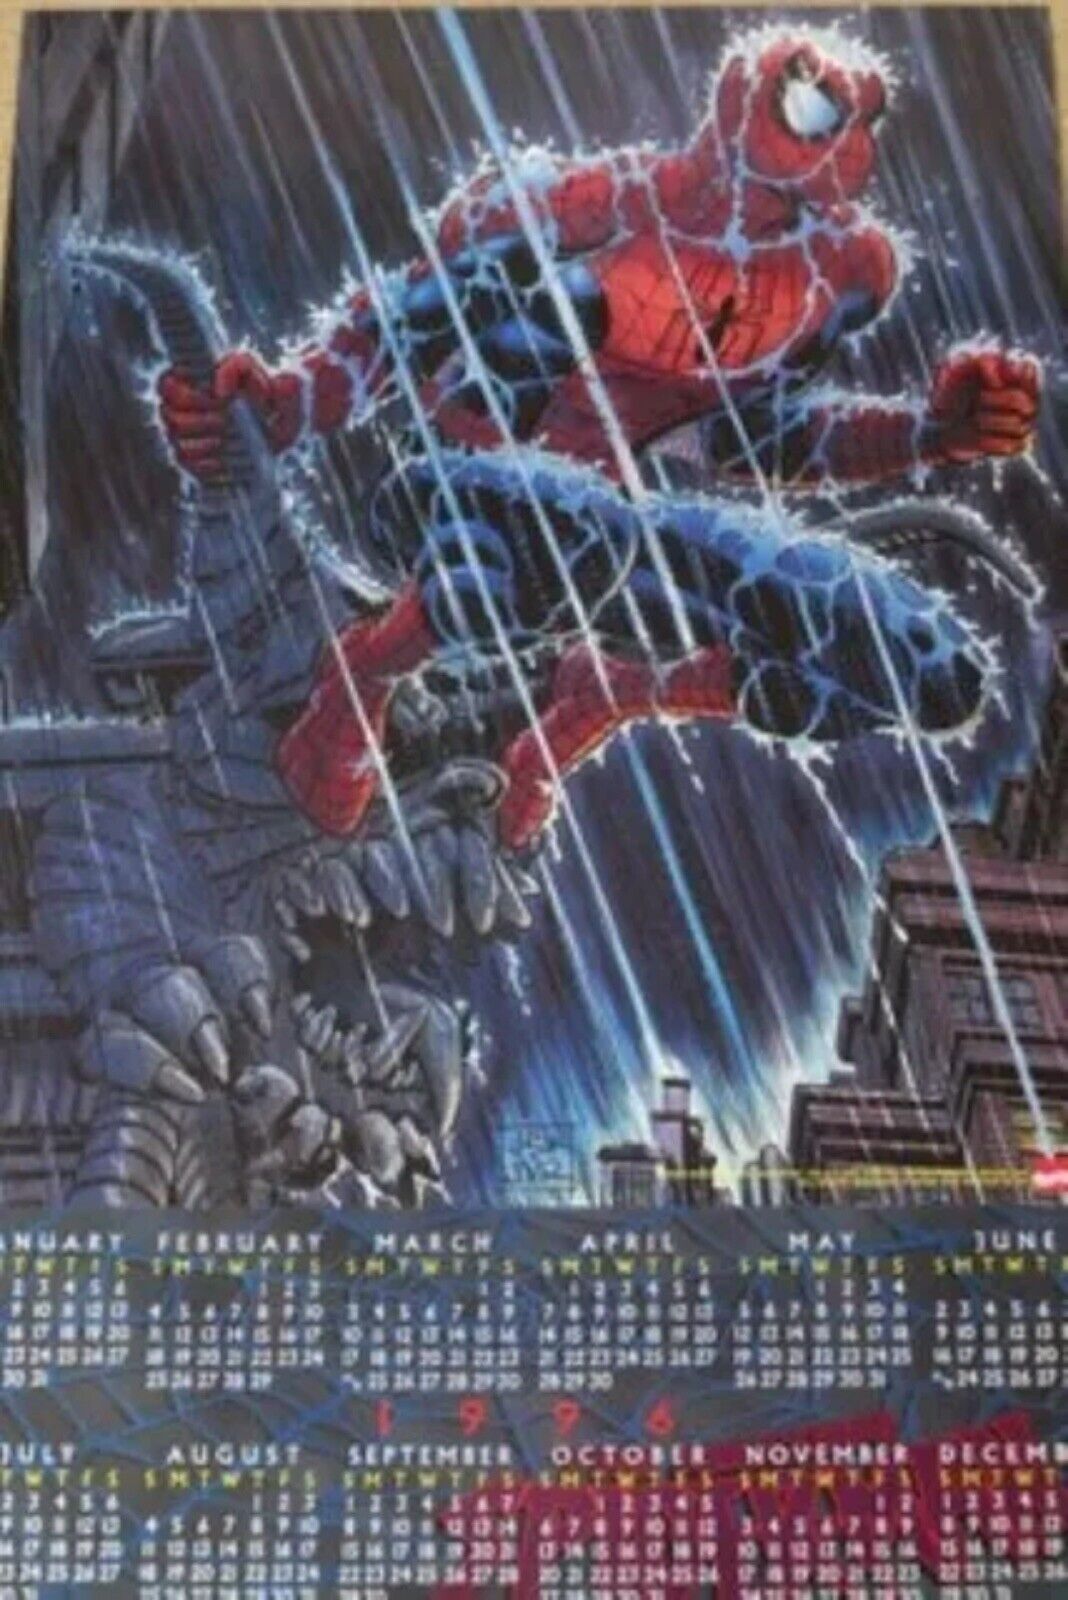 John Romita Jr: Spider-man Marvel Calendar Poster 1996 - Vintage Collage - New